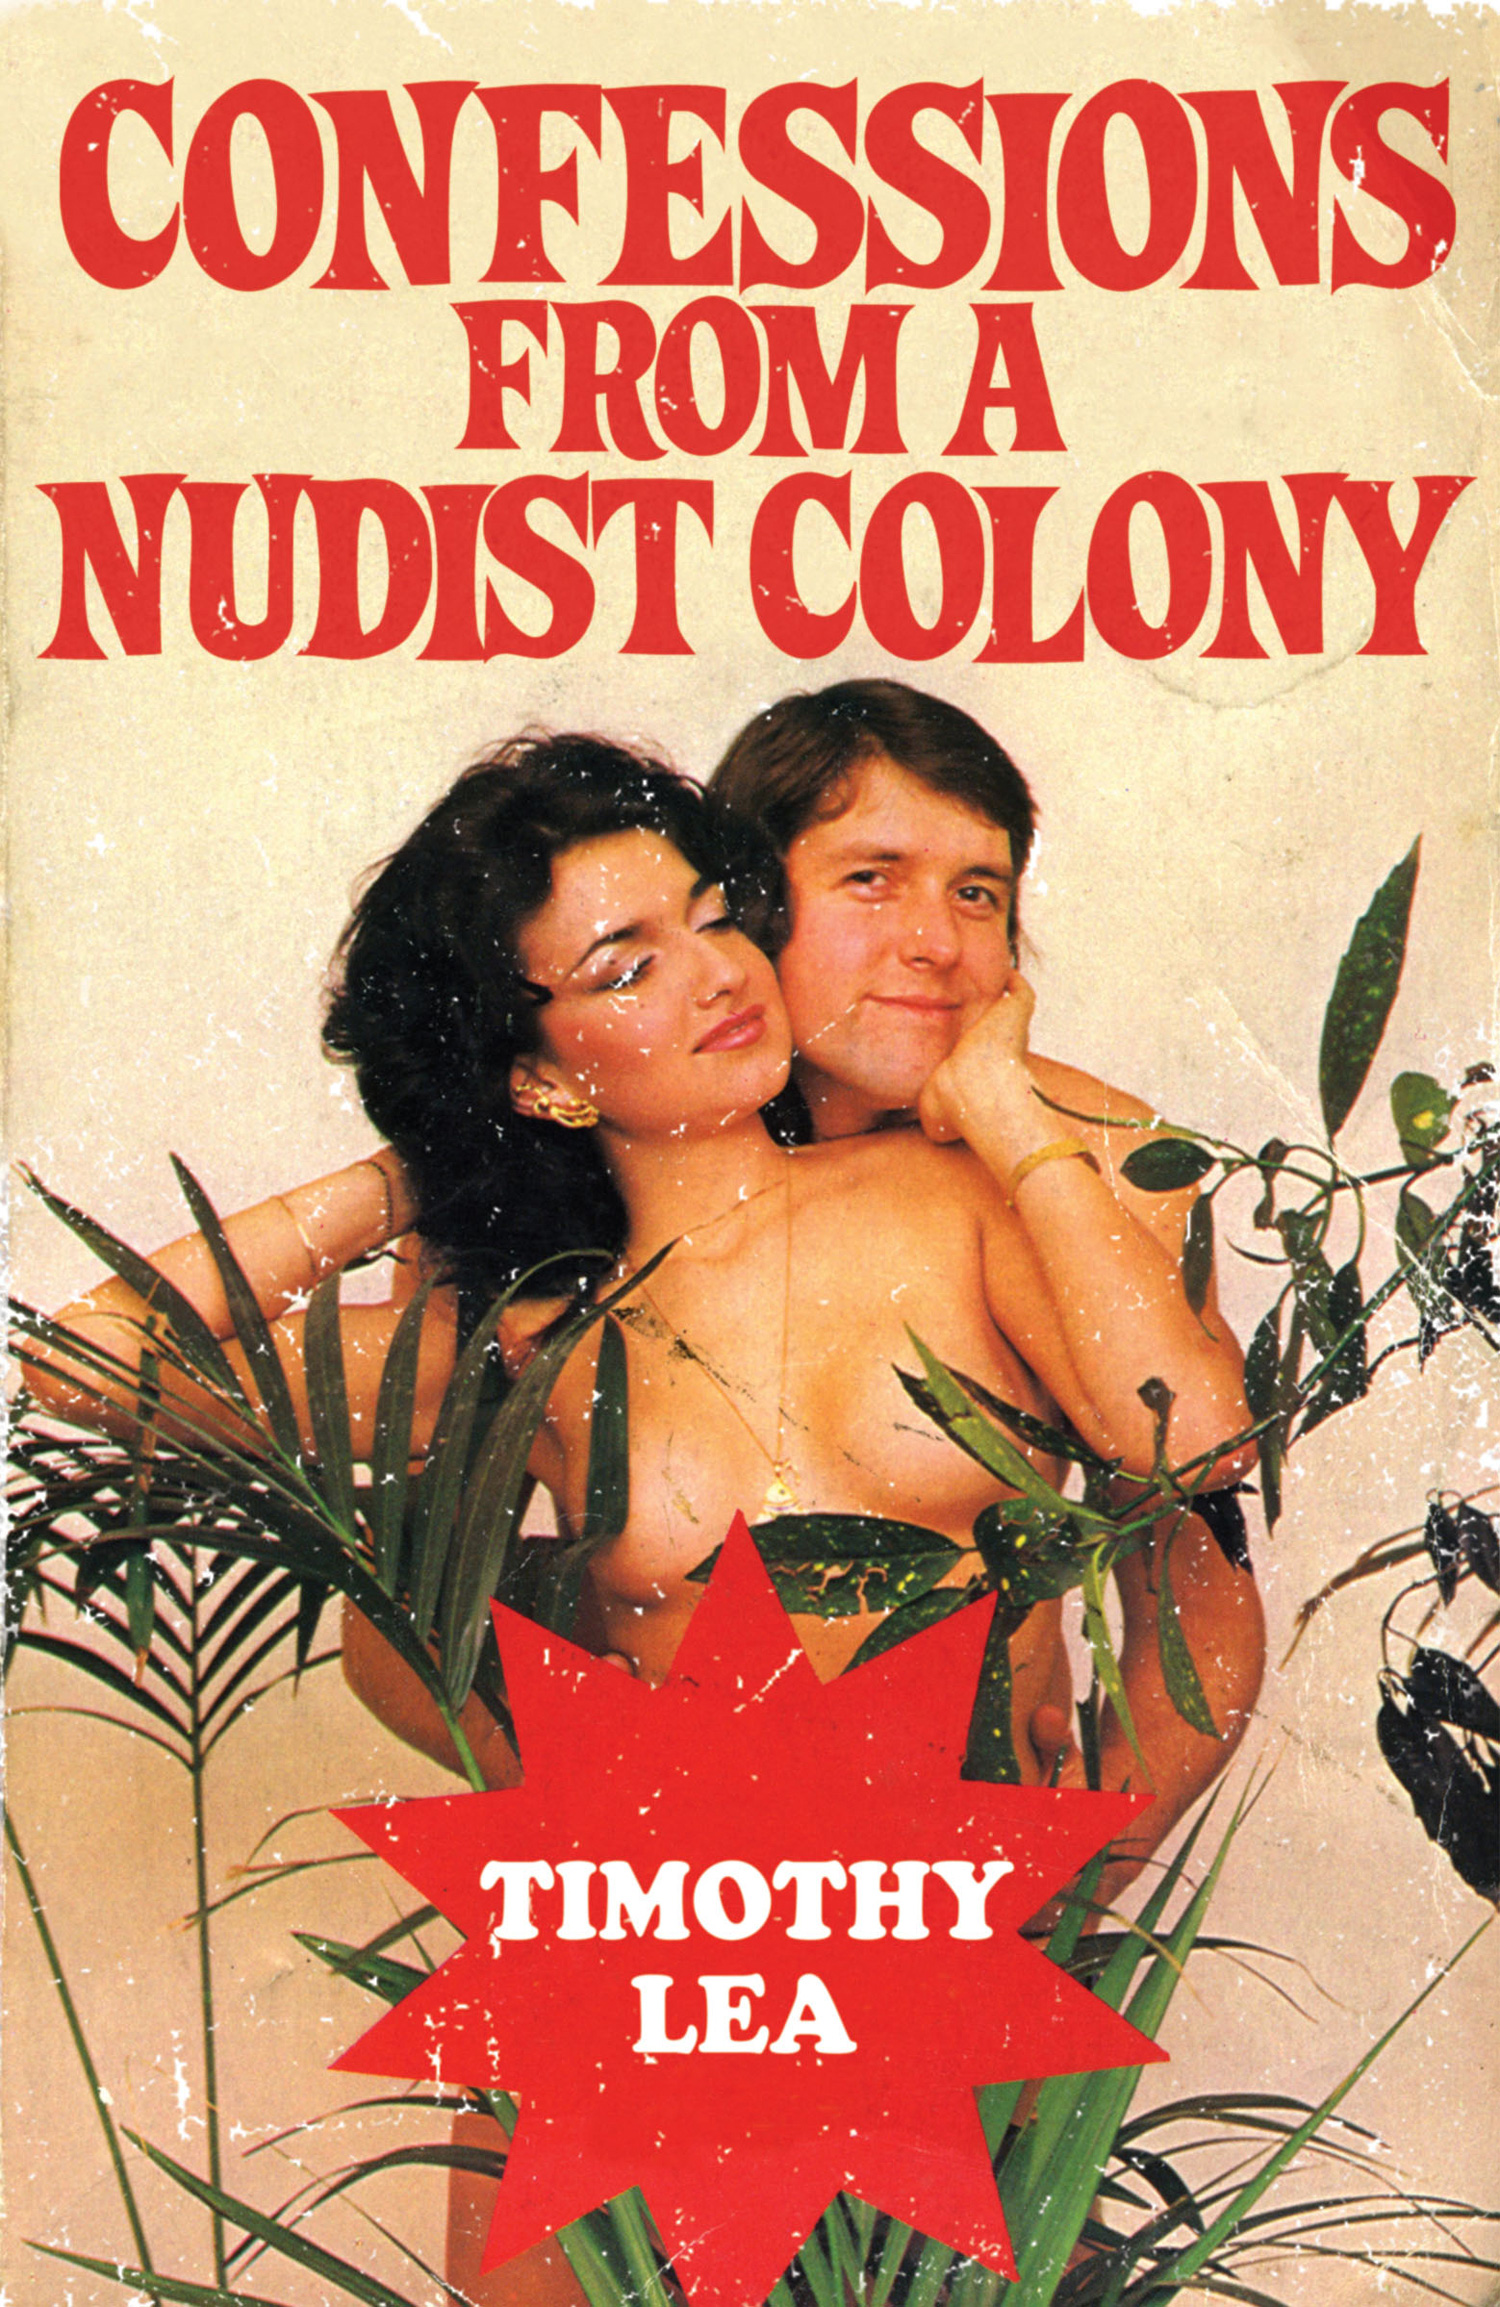 Lesbian Nudist Colony